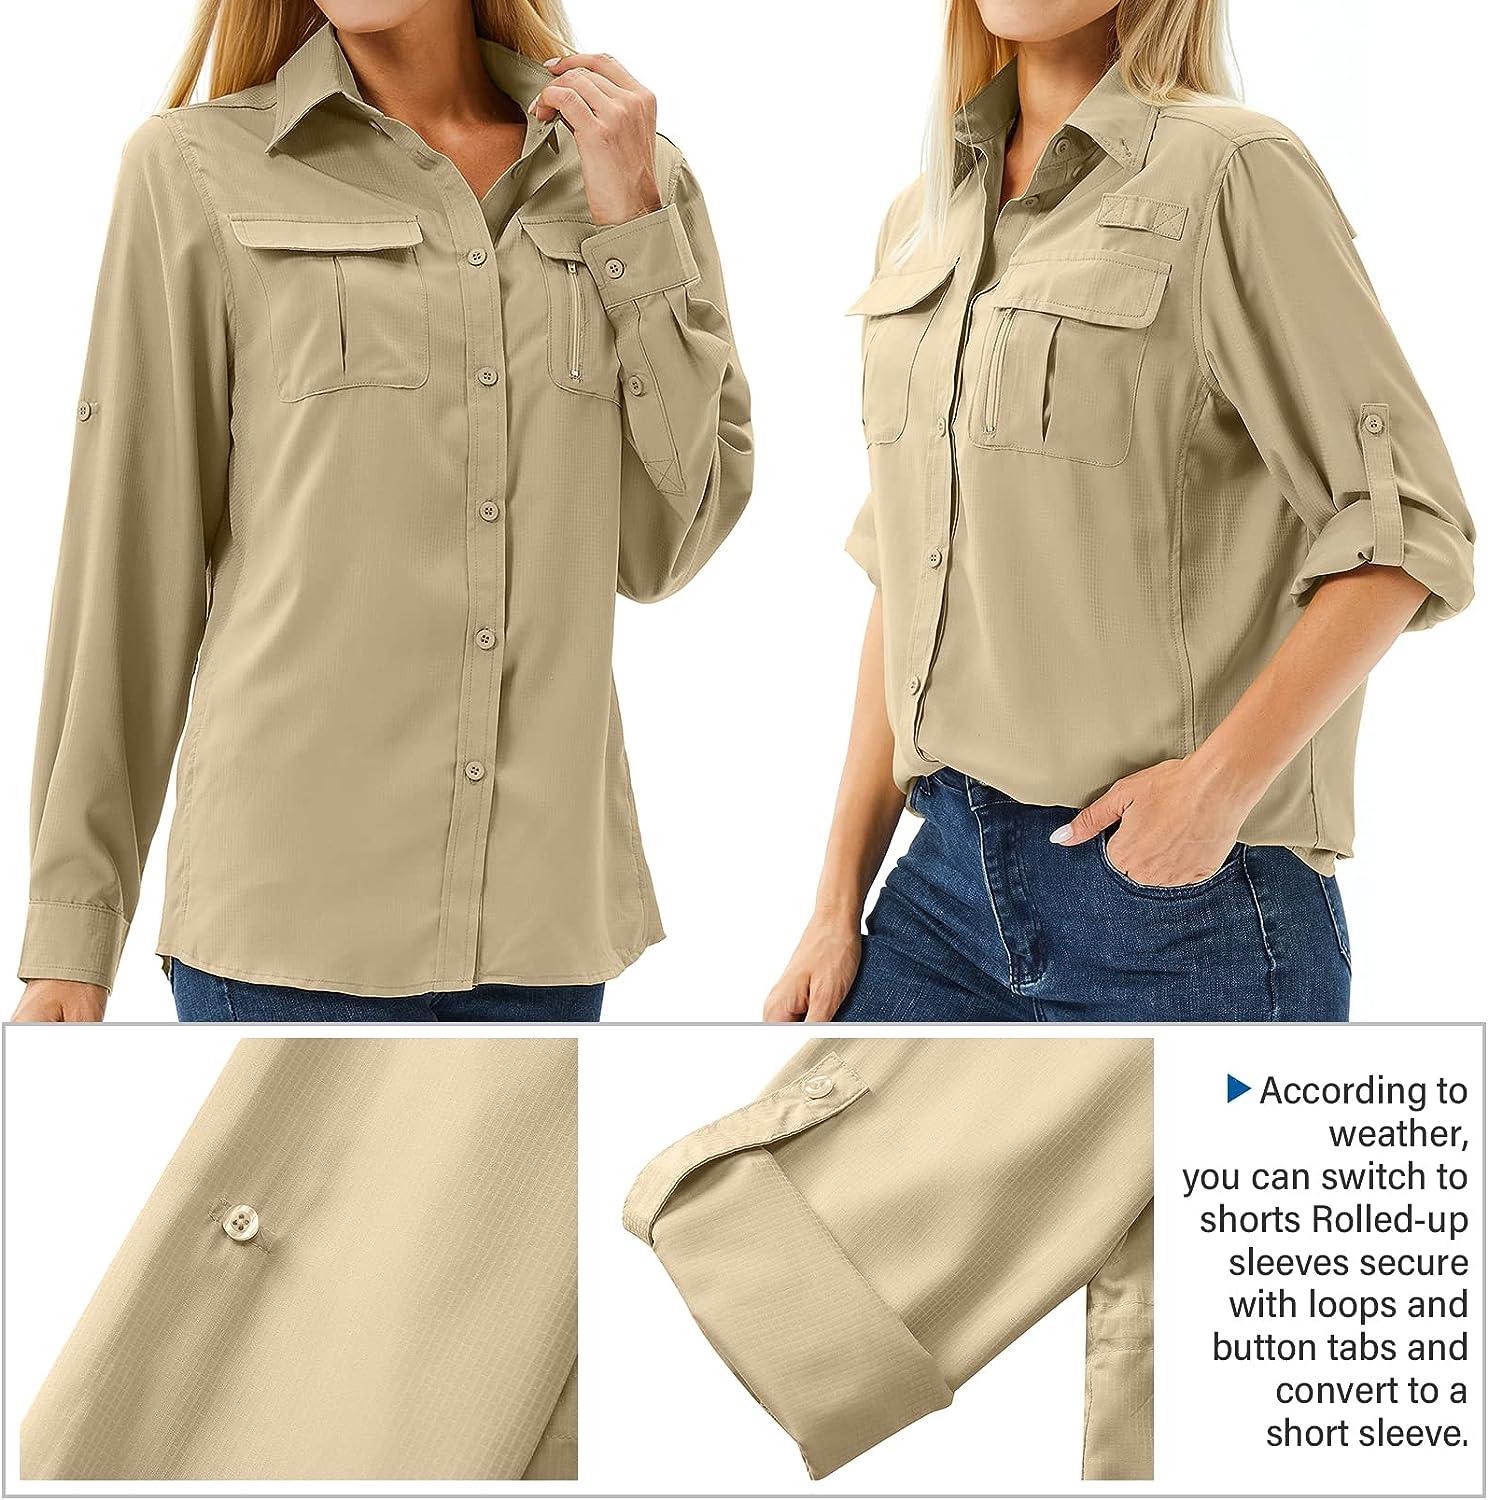 Toomett Womens Upf 50 Long Sleeve Safari Shirts,Sun Protection Quick Dry  Outdoor Fishing Hiking Gardening Shirt,F5026,Army,Xs